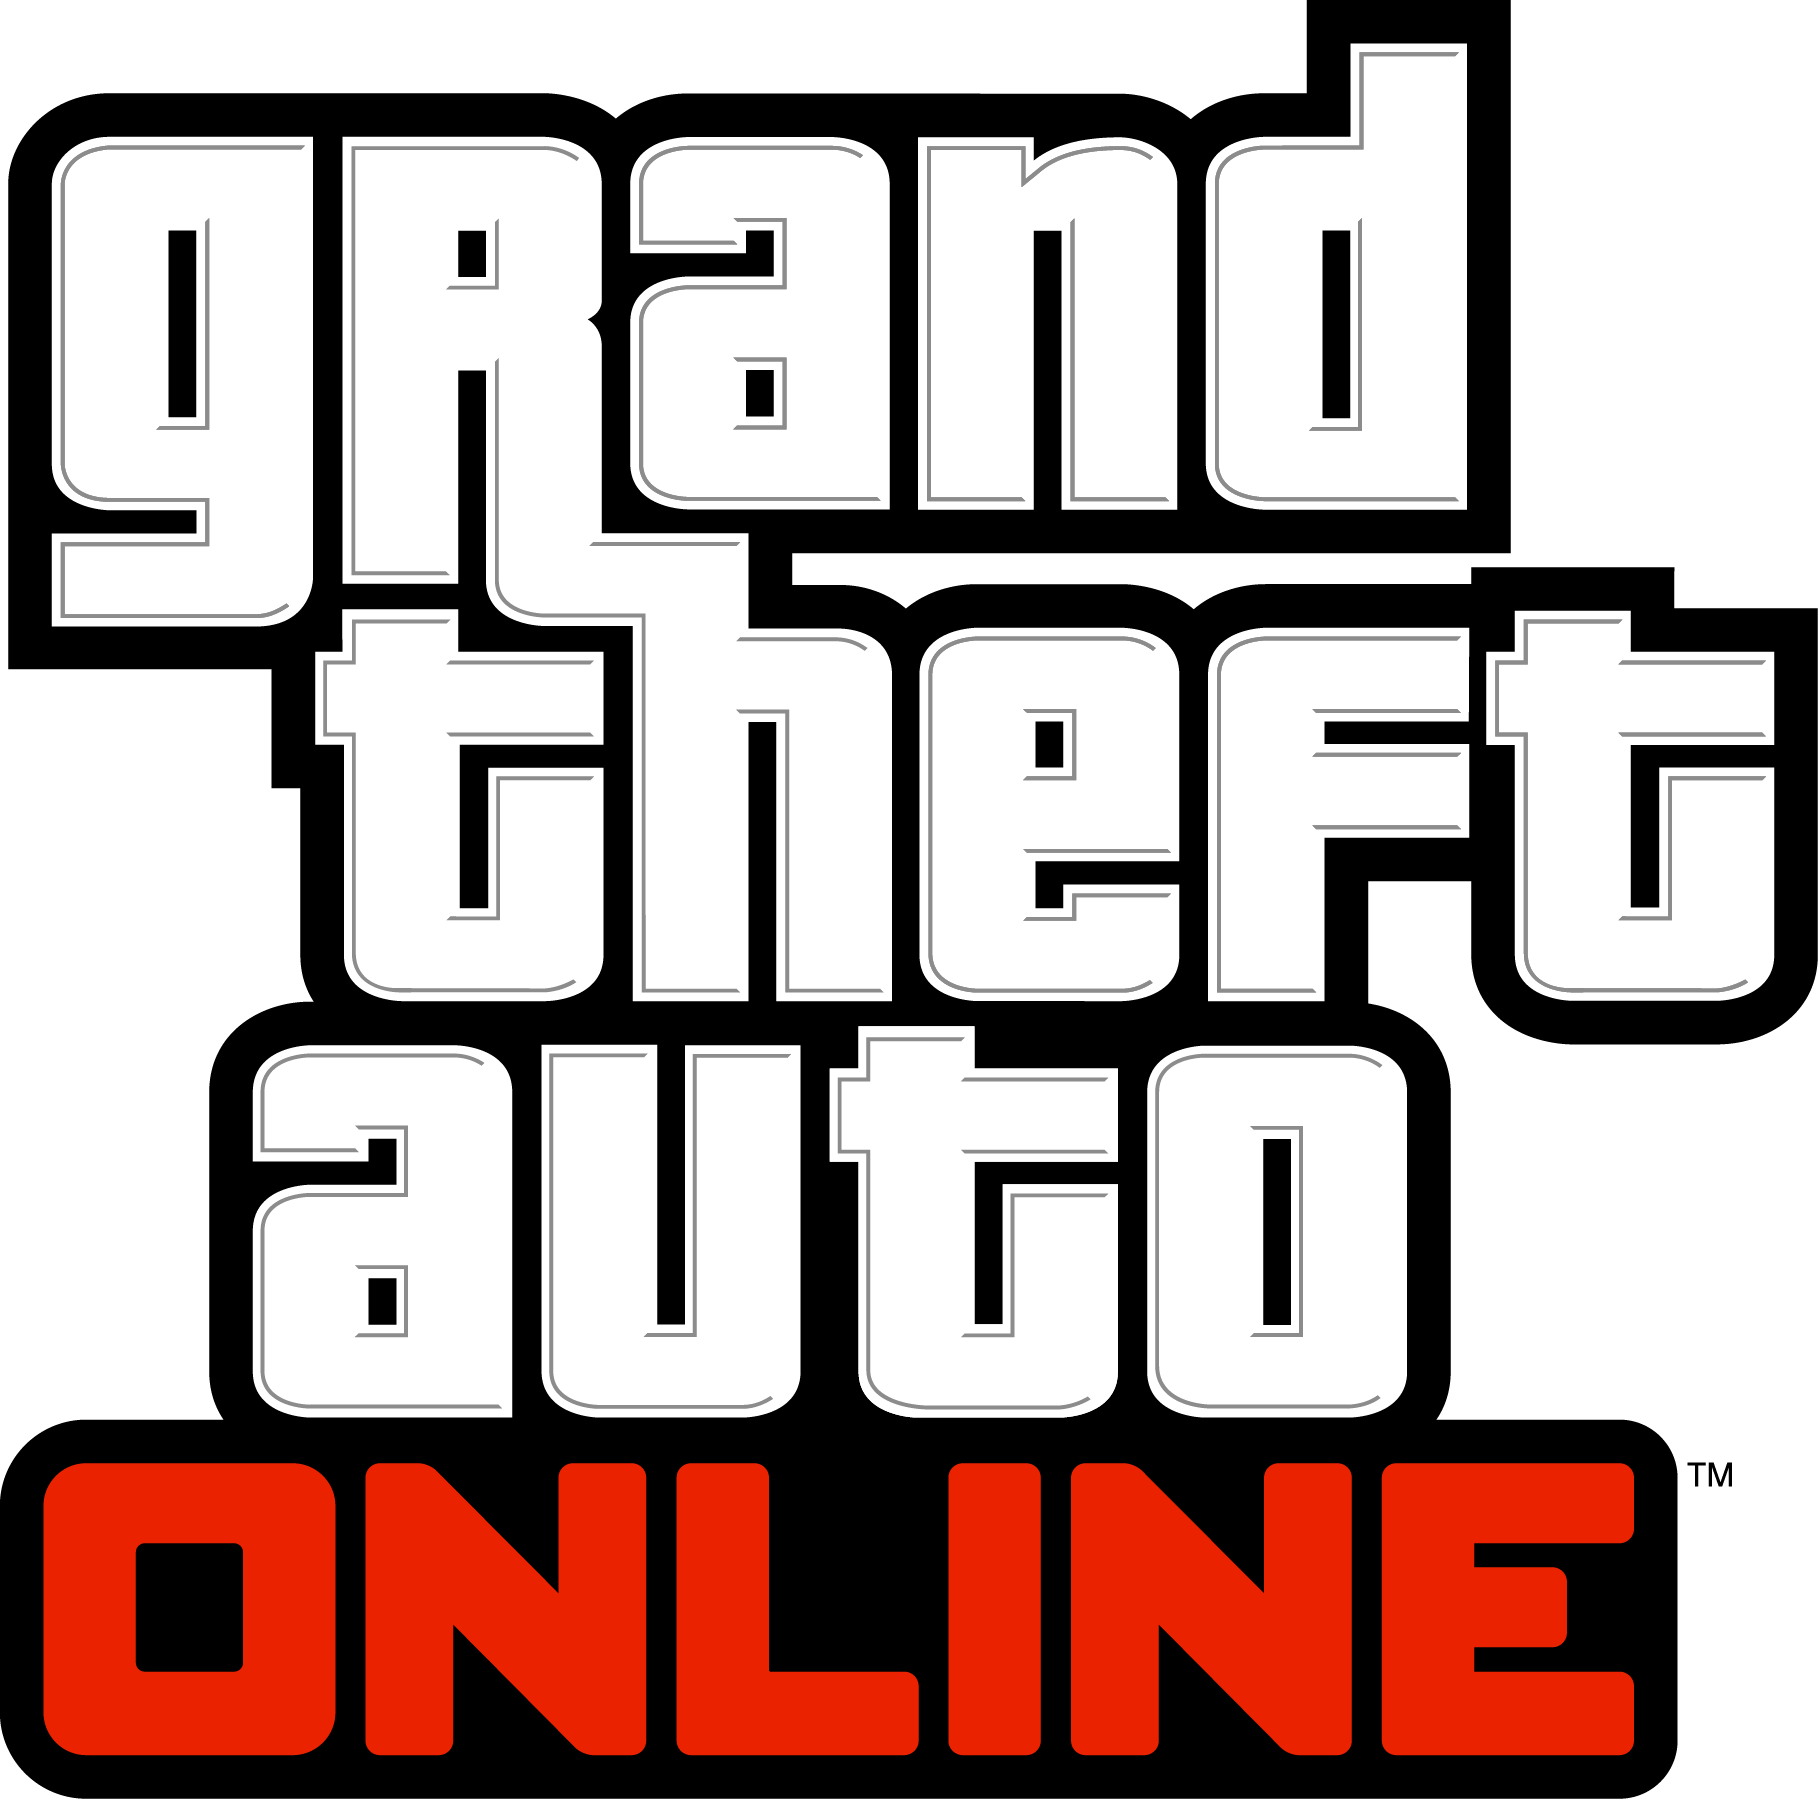 grand theft auto online logo